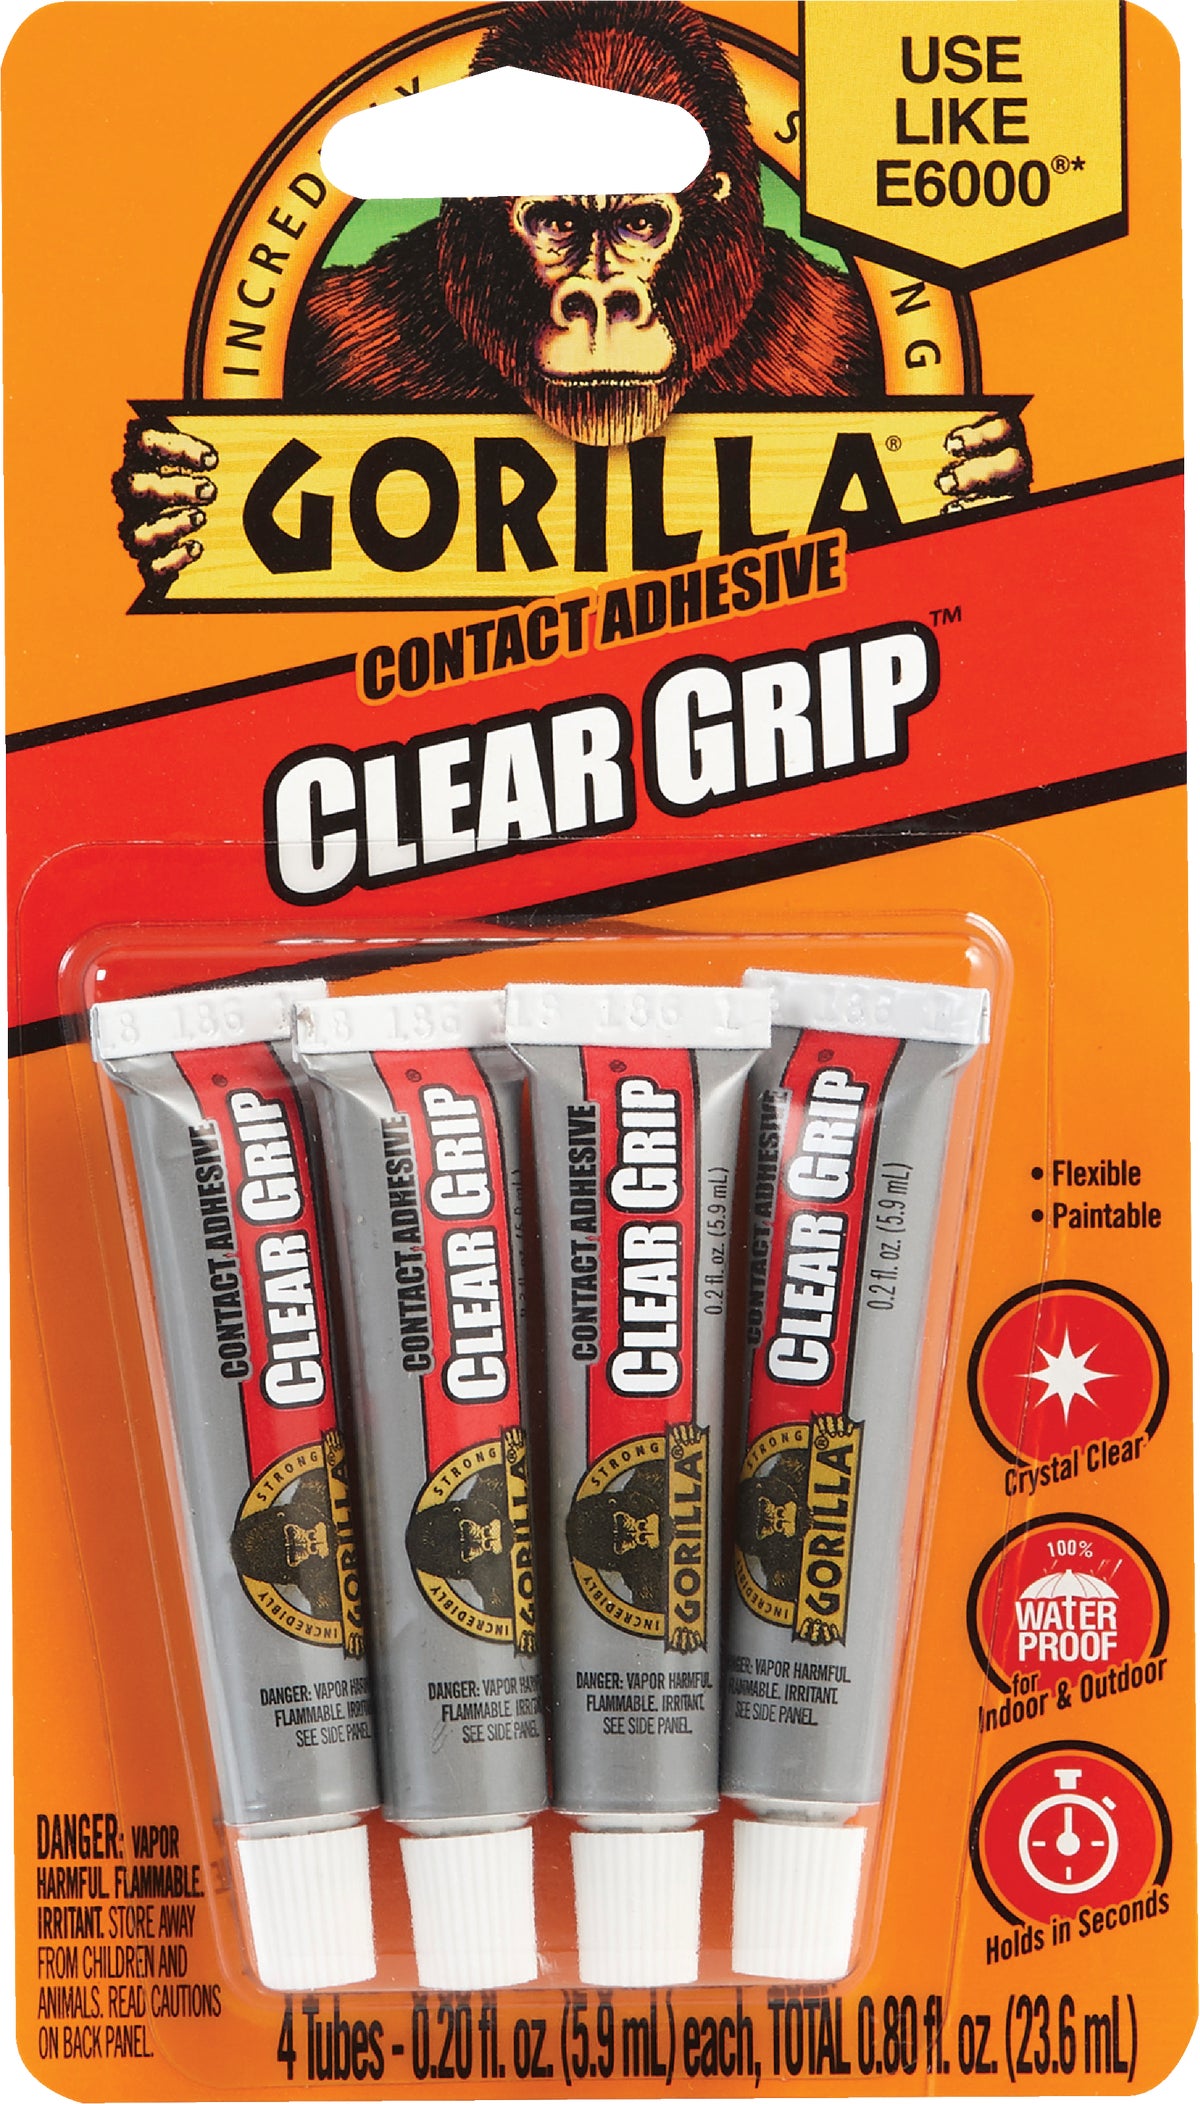 Gorilla Clear Grip High Strength 3 oz.